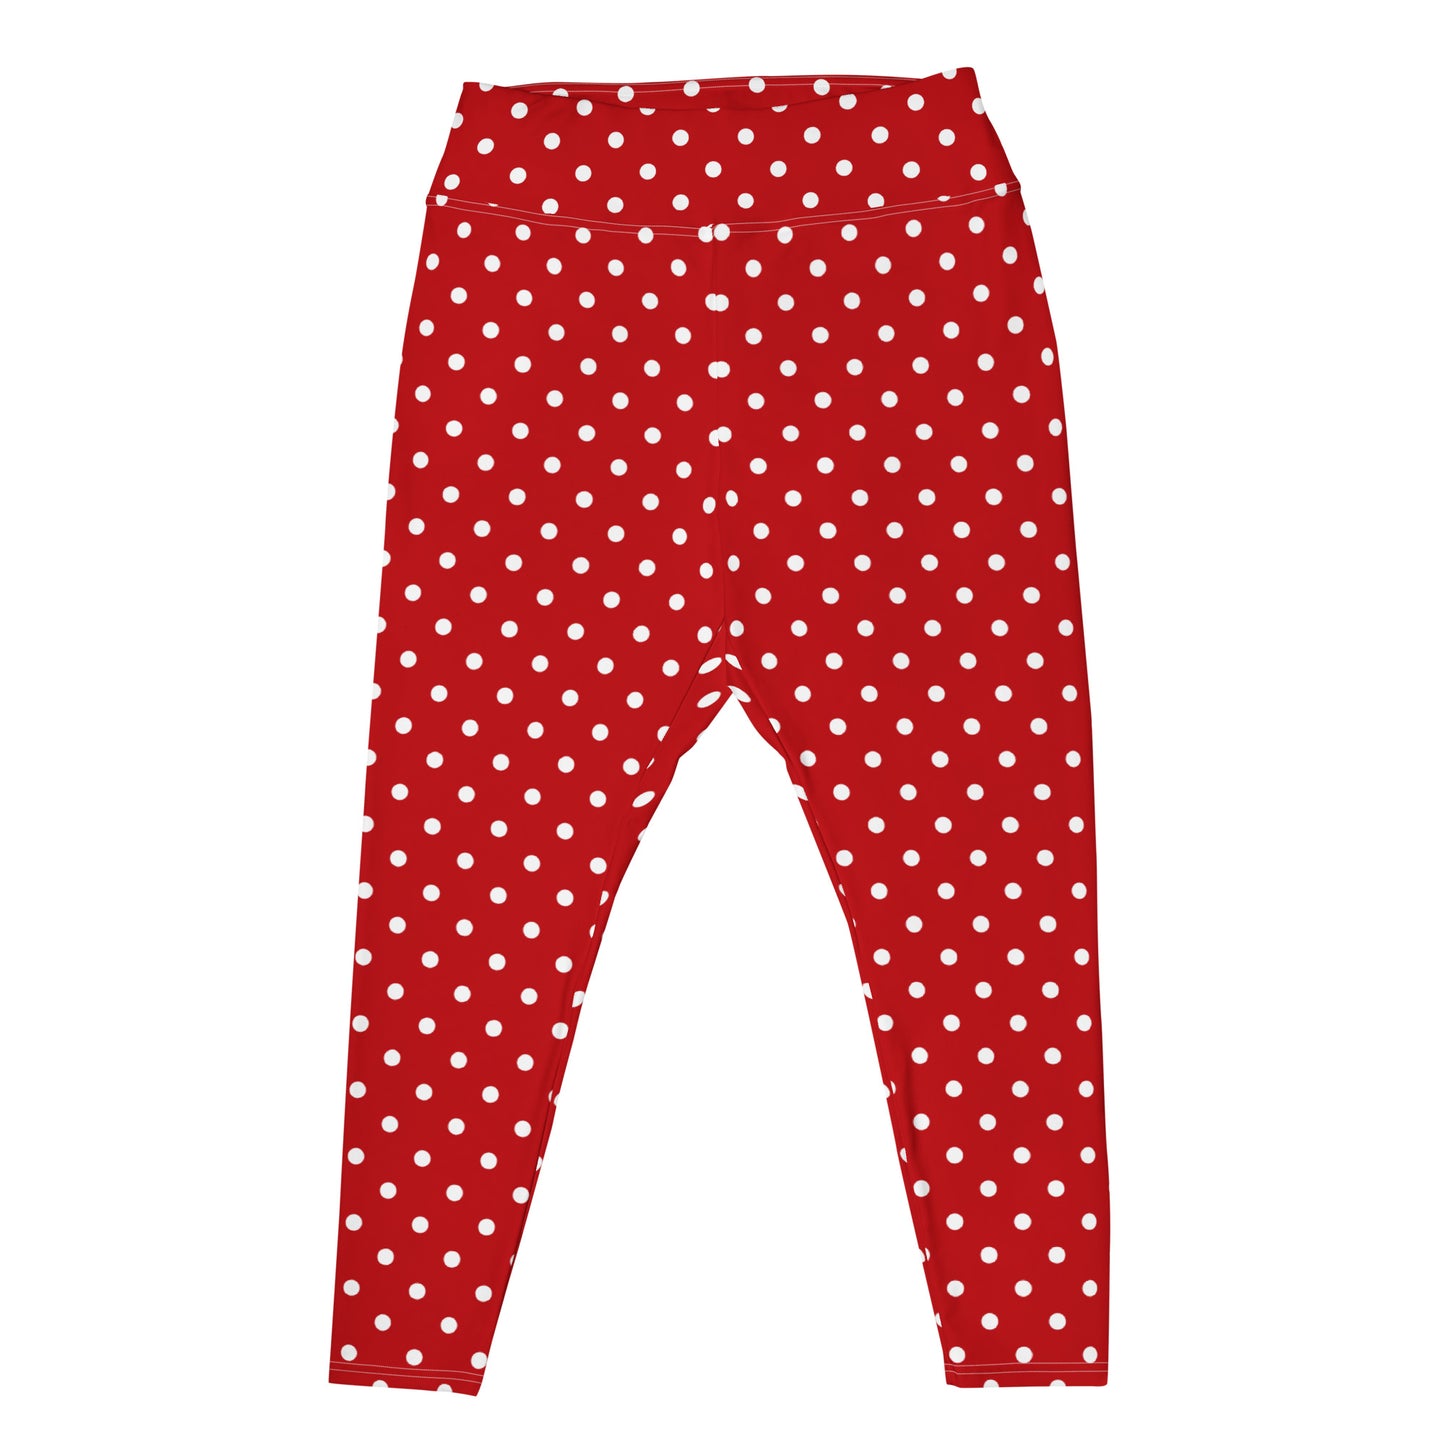 Red And White Polka Dot Plus Size Women Leggings, Printed Designer Christmas Holiday Workout Gym Sports Fun Yoga Pants Tights (2XL-6XL)